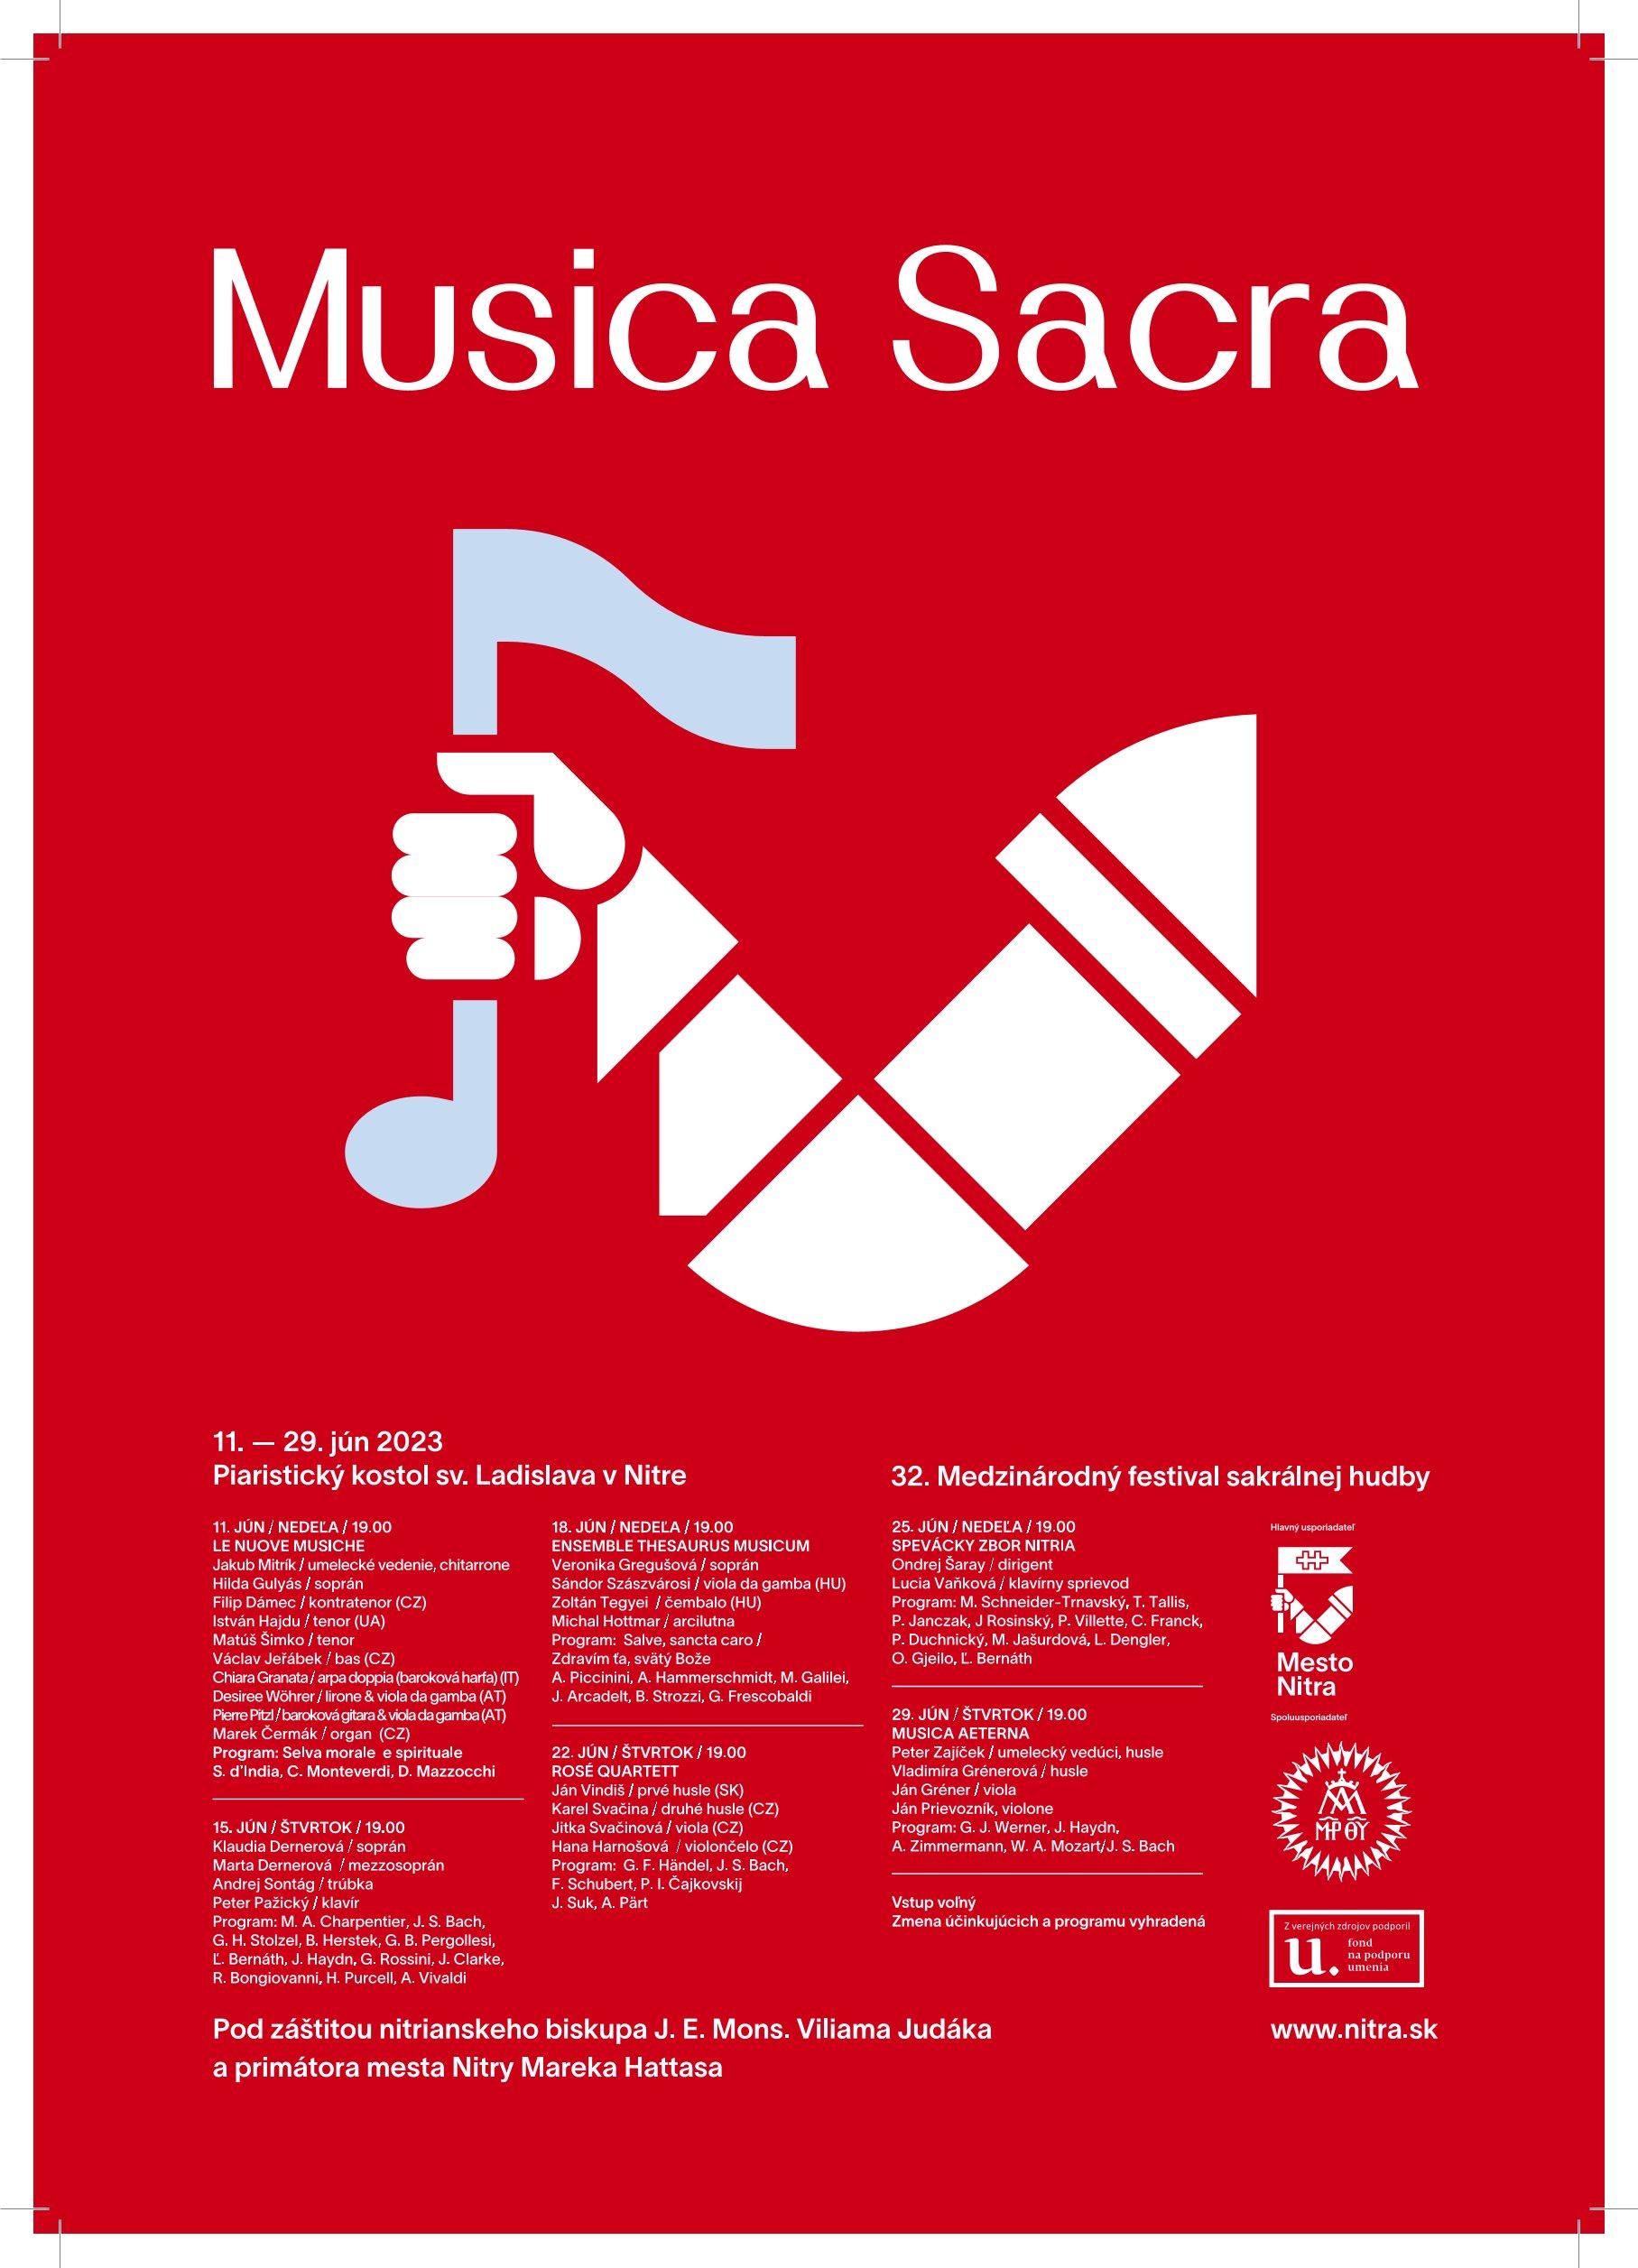 Nitra, Musica Sacra, plagat